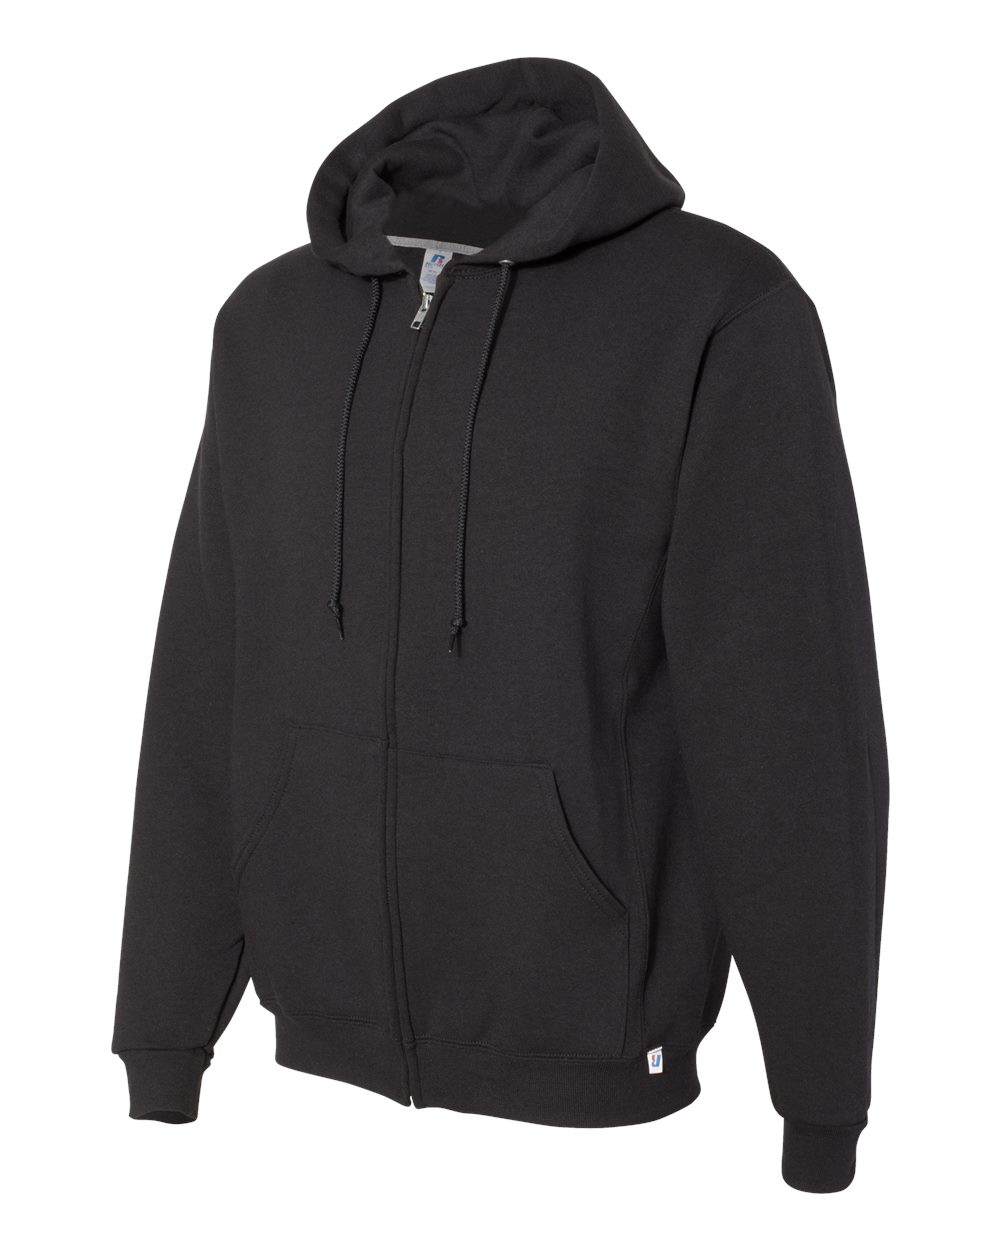 Russell Athletic 697HBM | Dri-Power® Fleece Full-Zip Hood | ShirtSpace